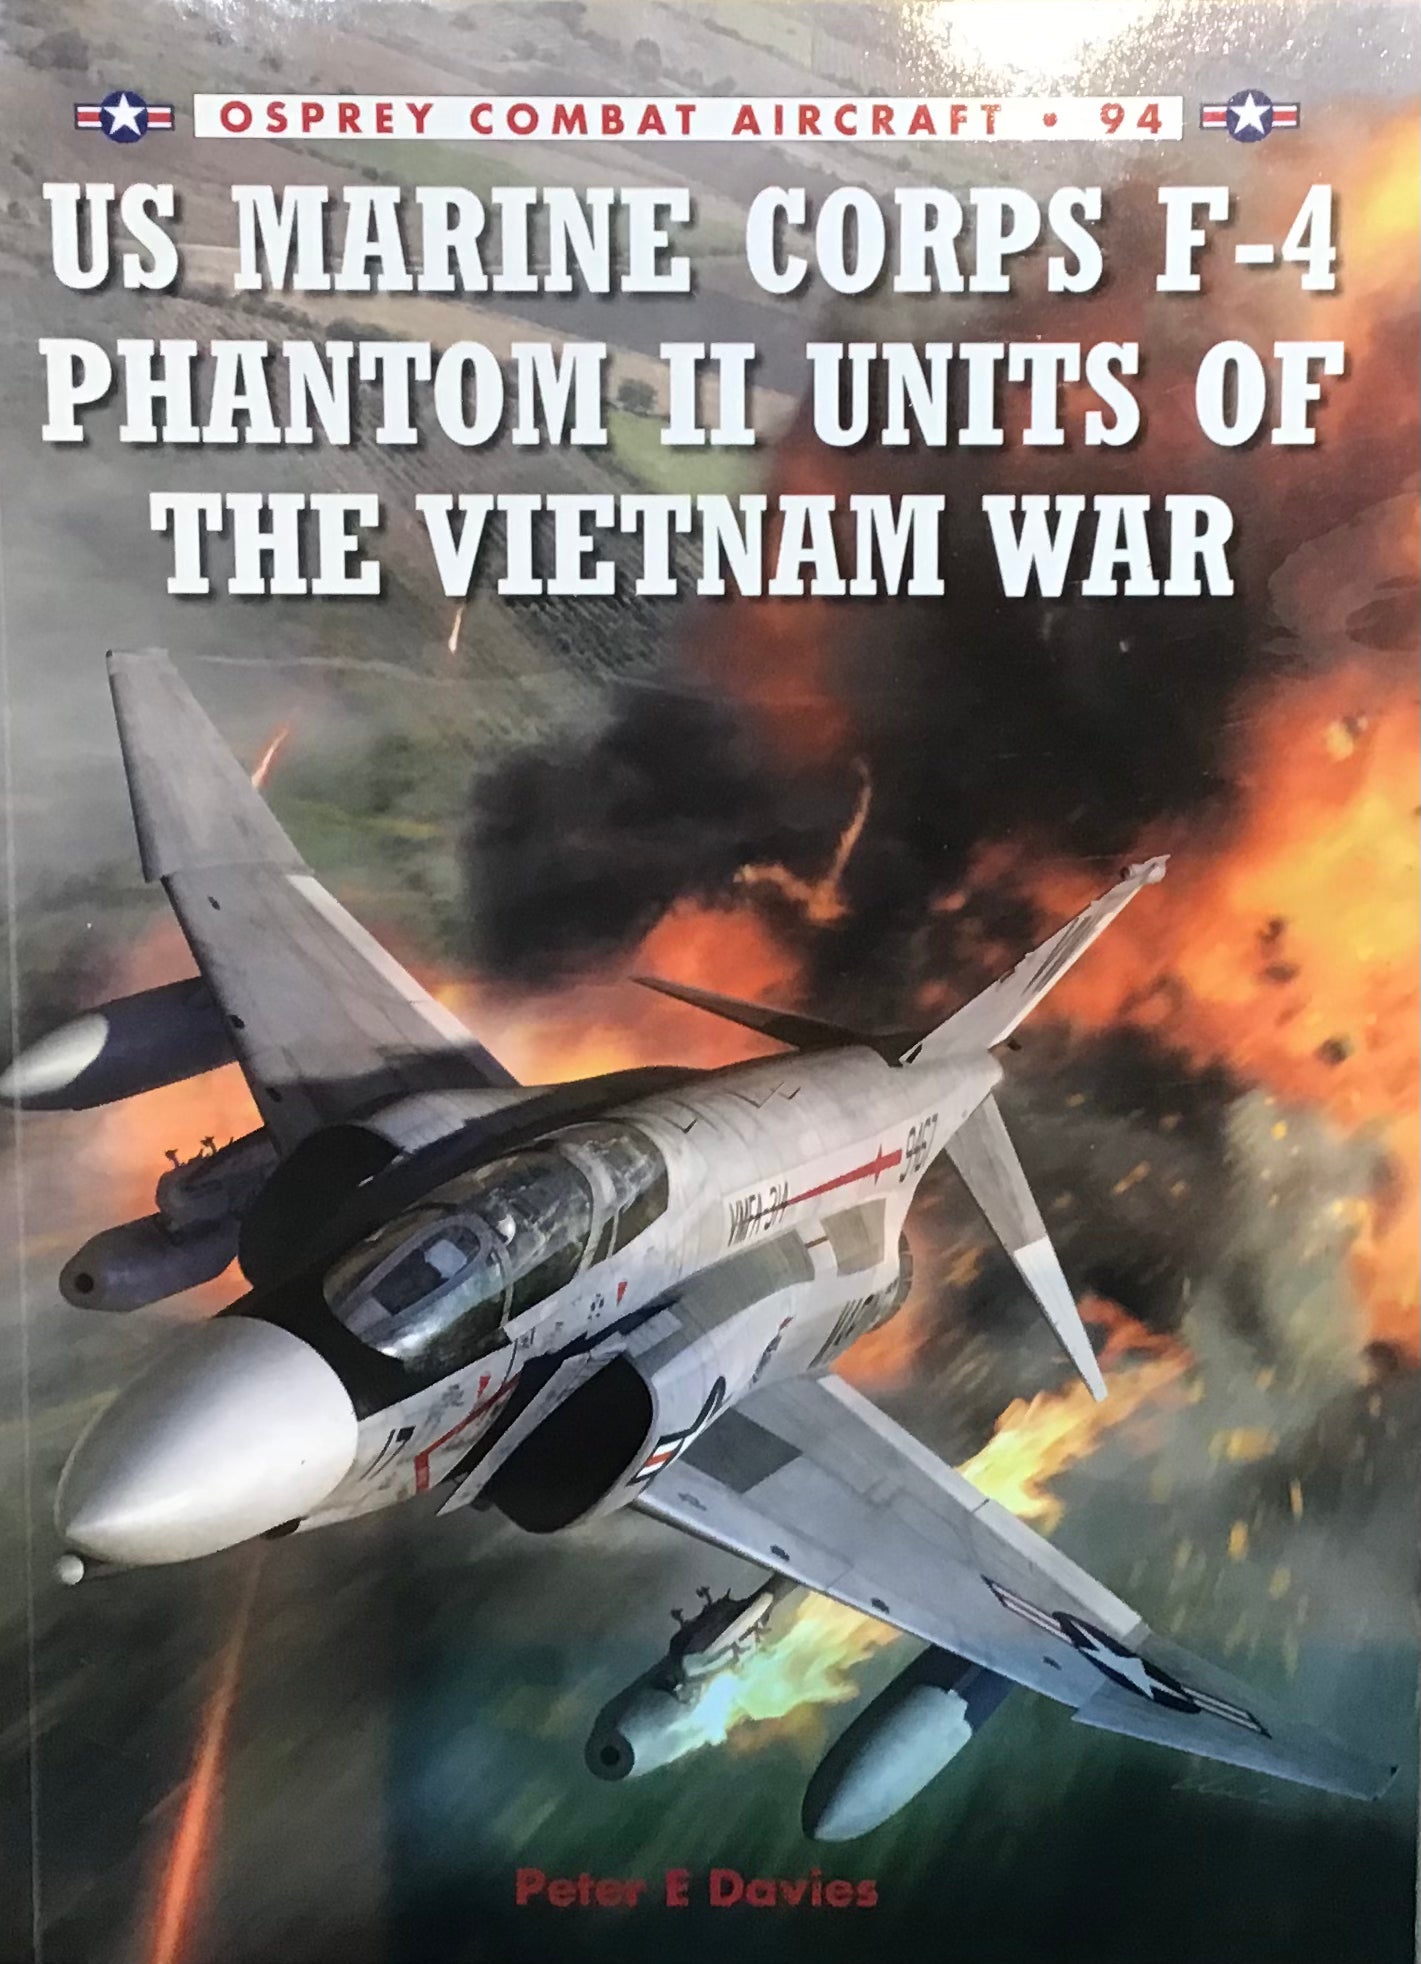 US Marine Corps F-4 Phantom II Units of The Vietnam War by Peter E Davies - Chester Model Centre